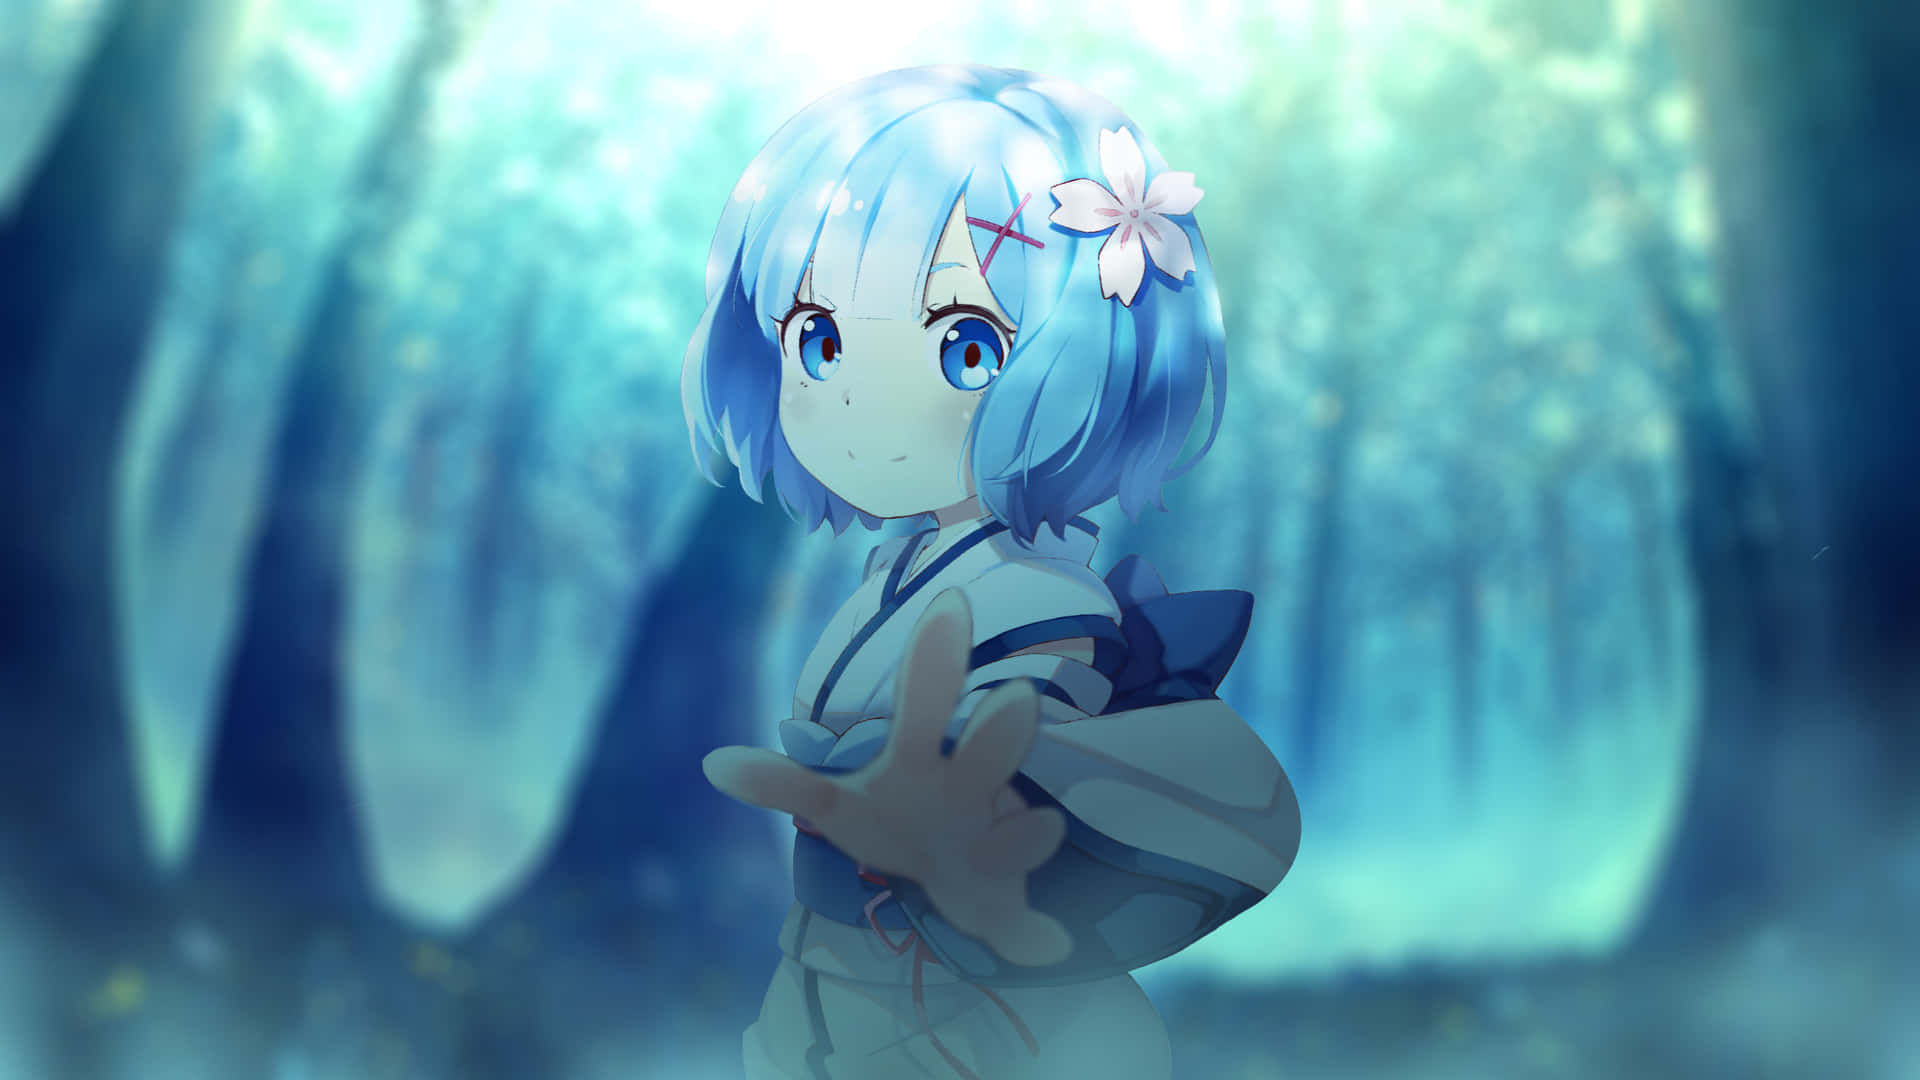 Emilia,den Halvelvere Heltinde Fra Anime-serien Re:zero.